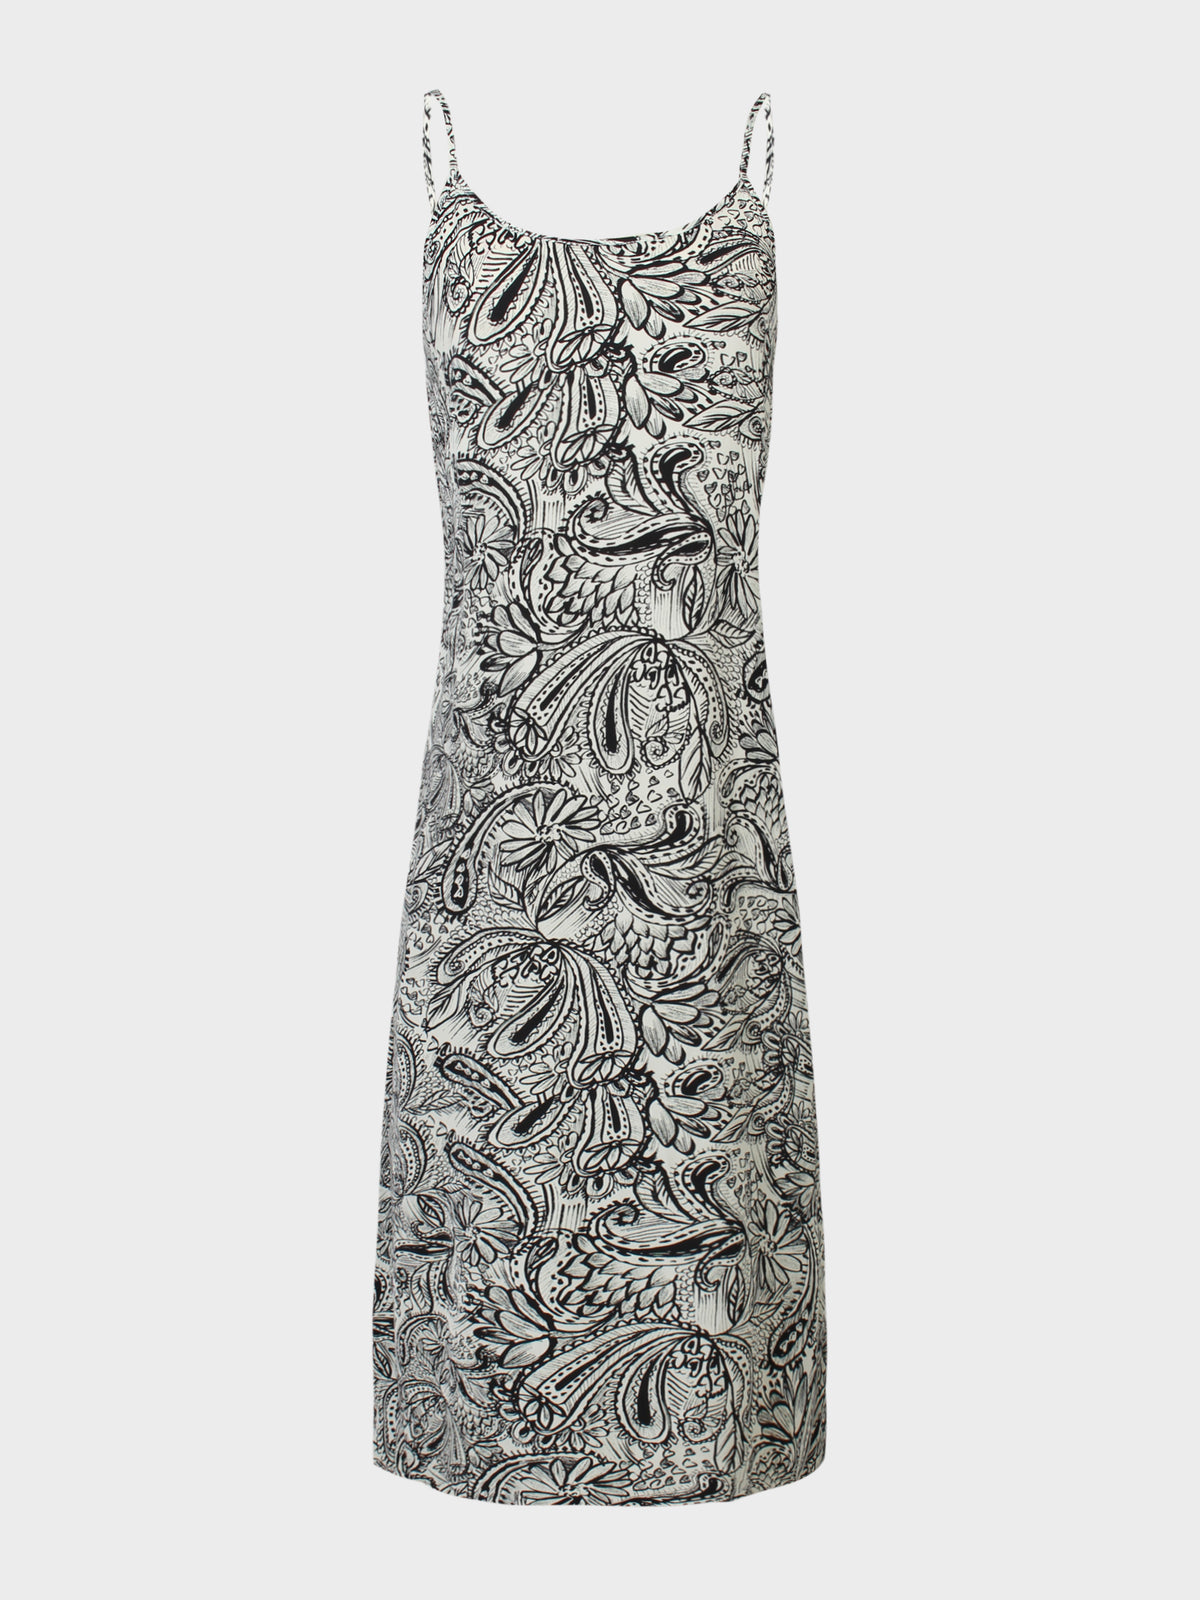 Printed Crew Neck Slip Dress-Sketch Floral